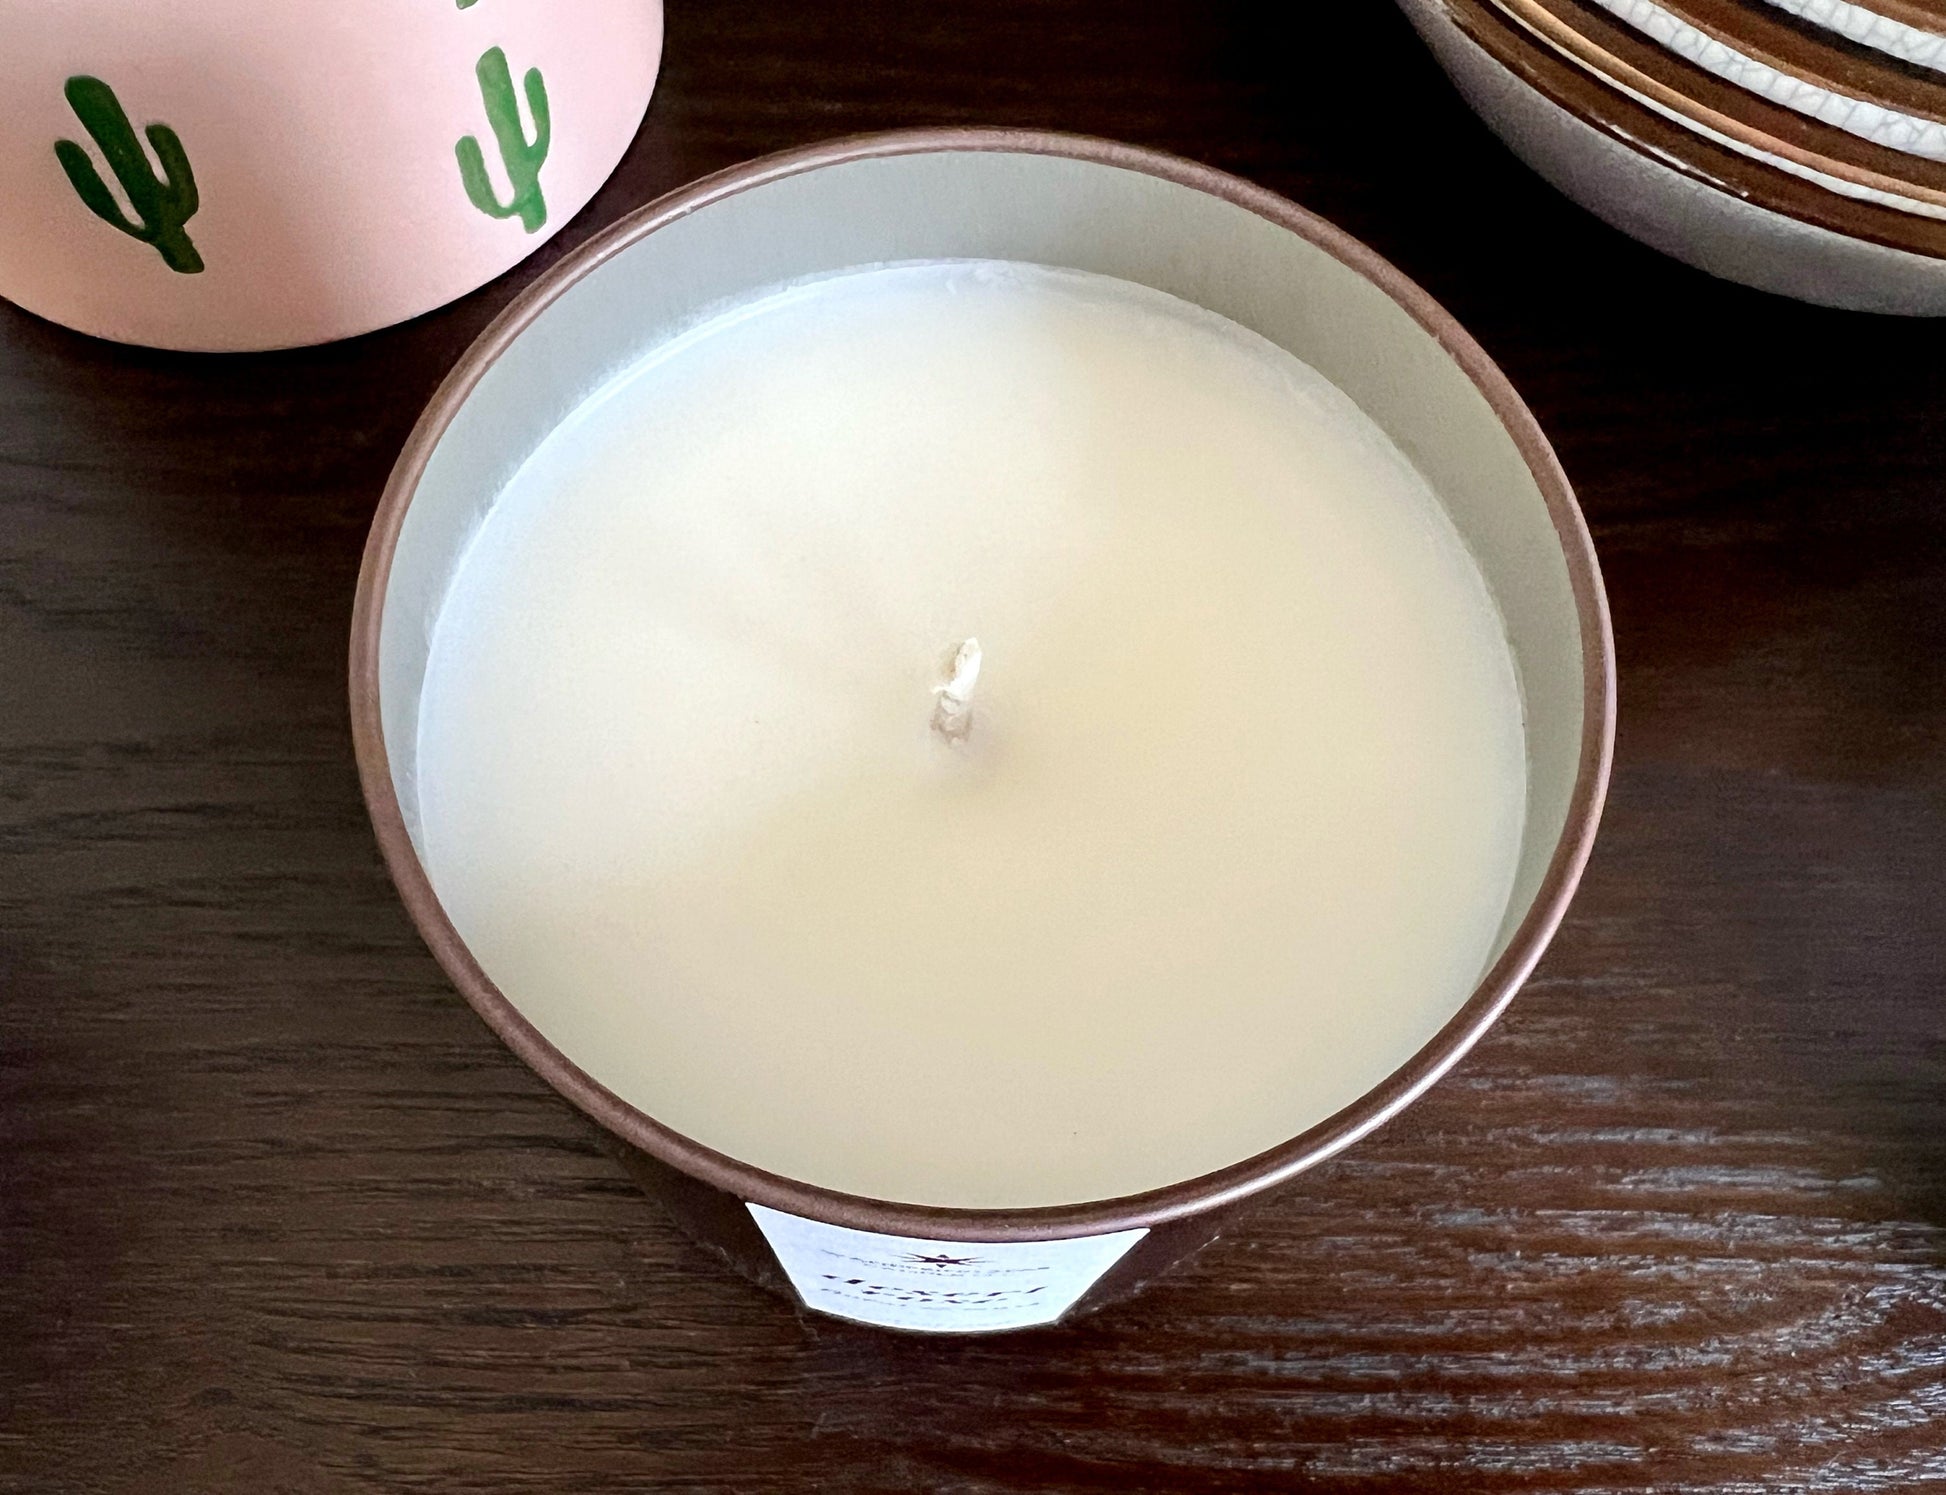 Sunrise Glow Candle | White Tea Candle | Citrus Candle | Spa Candle | Self-Care Candle | Meditation Candle | Boho Chic Decor | Made in Texas